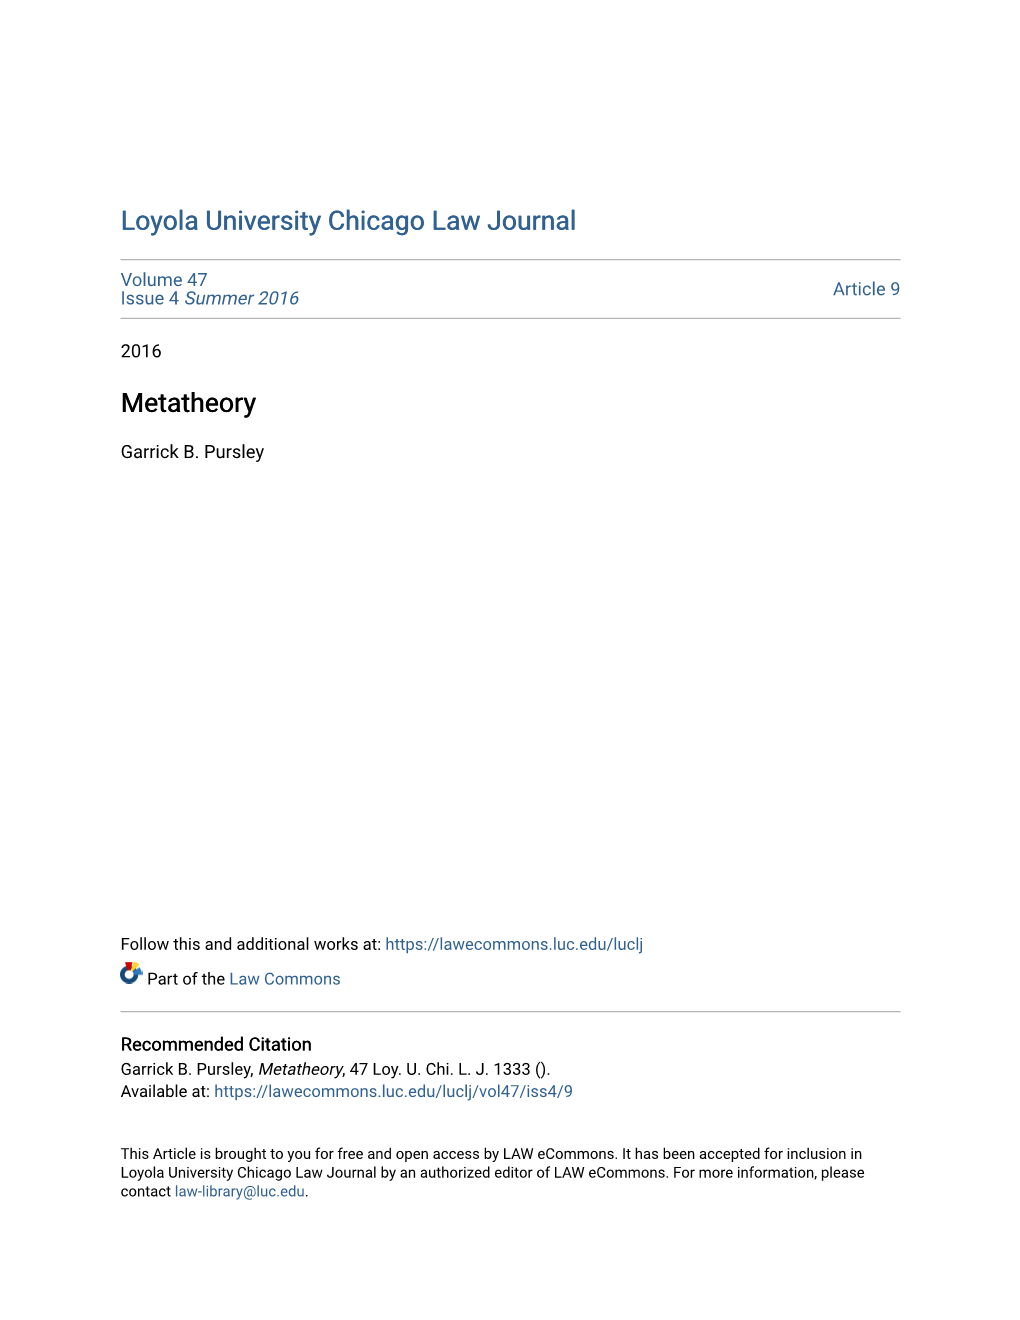 Loyola University Chicago Law Journal Metatheory